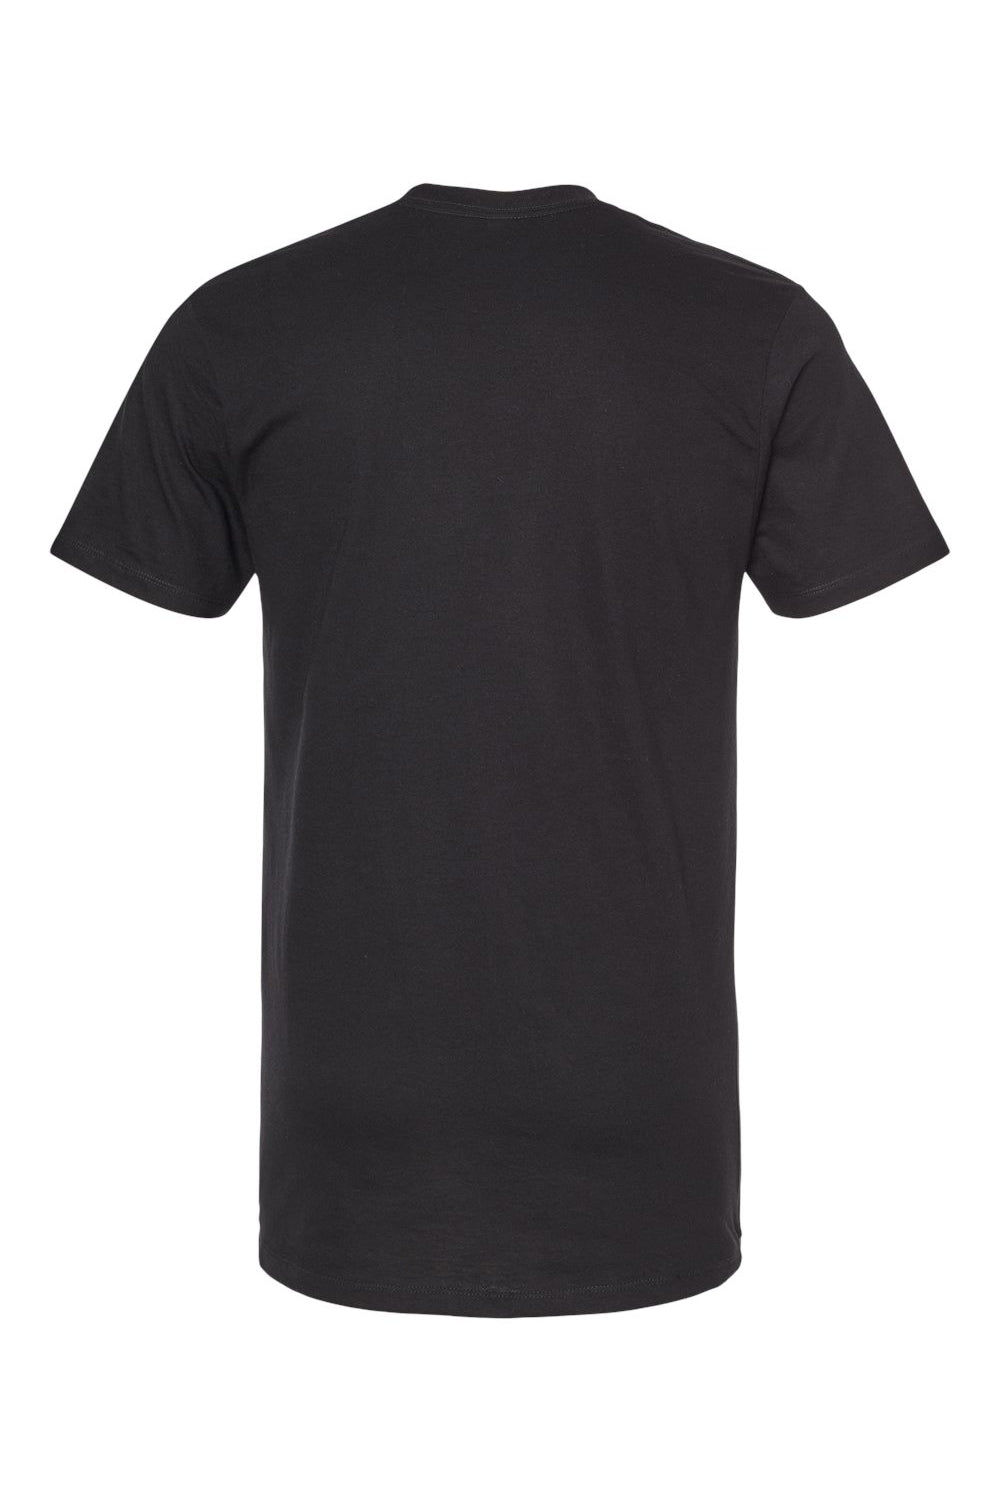 Tultex 541 Mens Premium Short Sleeve Crewneck T-Shirt Black Flat Back